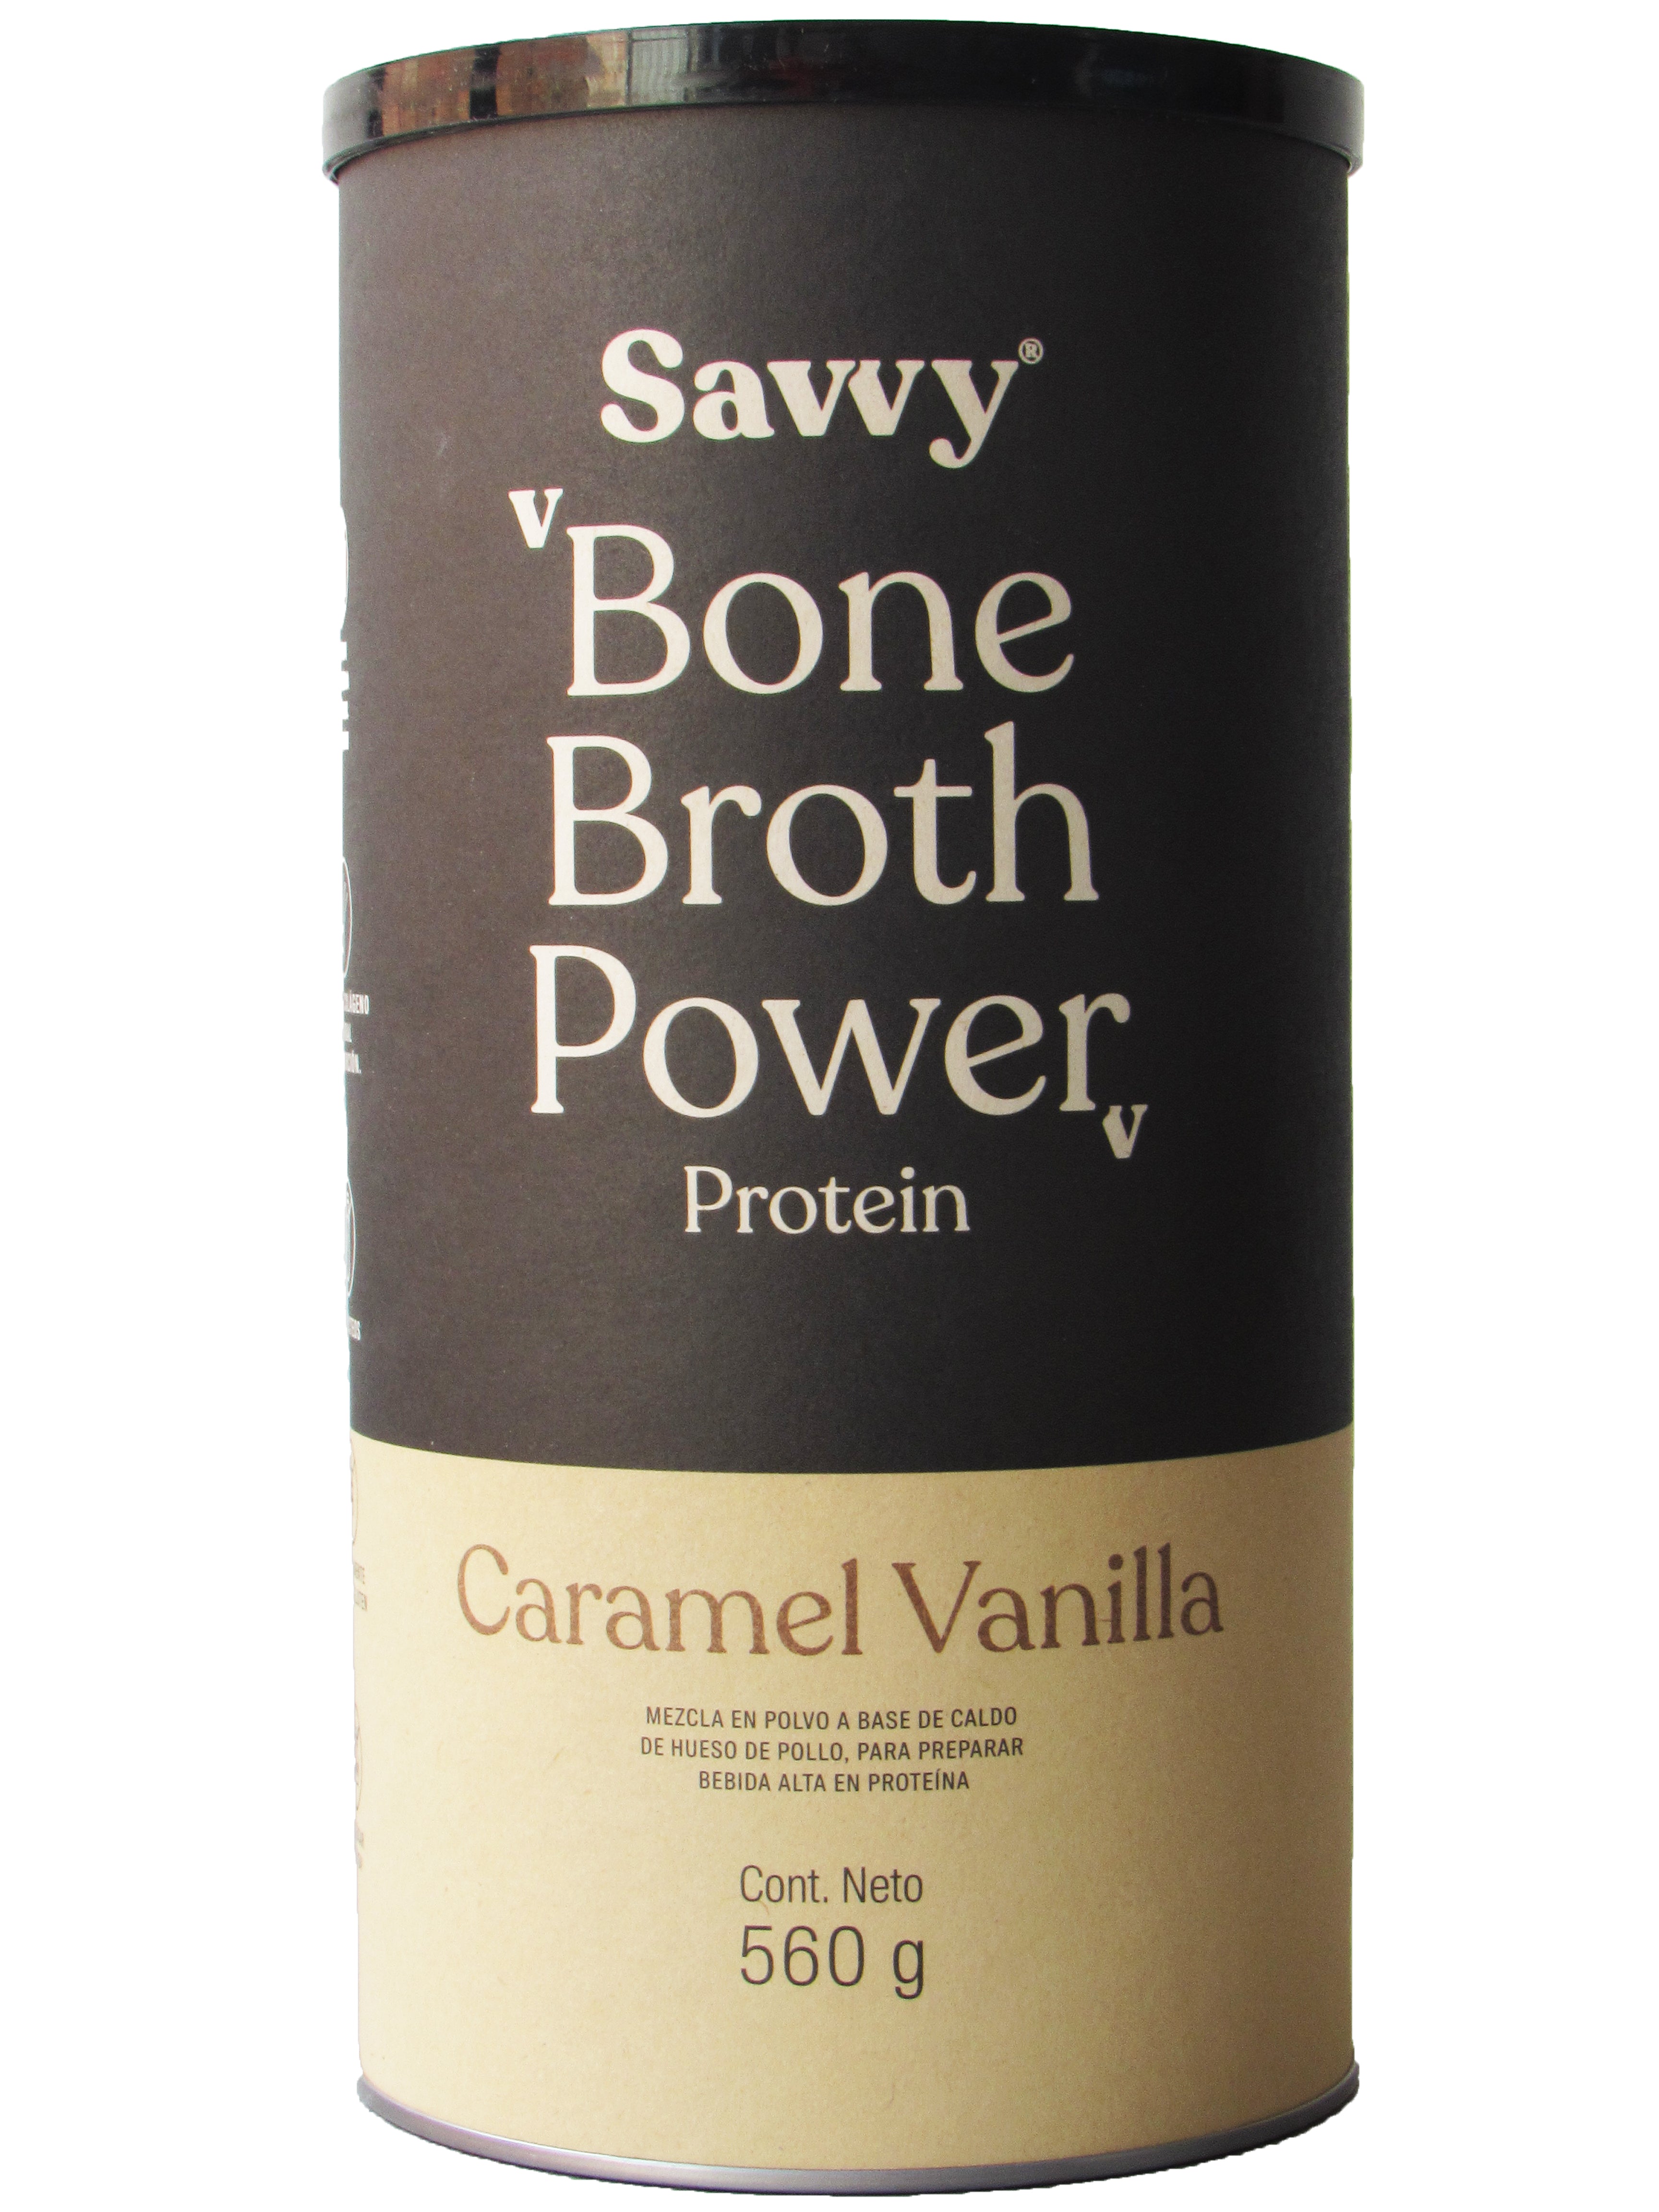 Protein Bone Broth Power 560gr (SAVVY) Caramel Vainilla